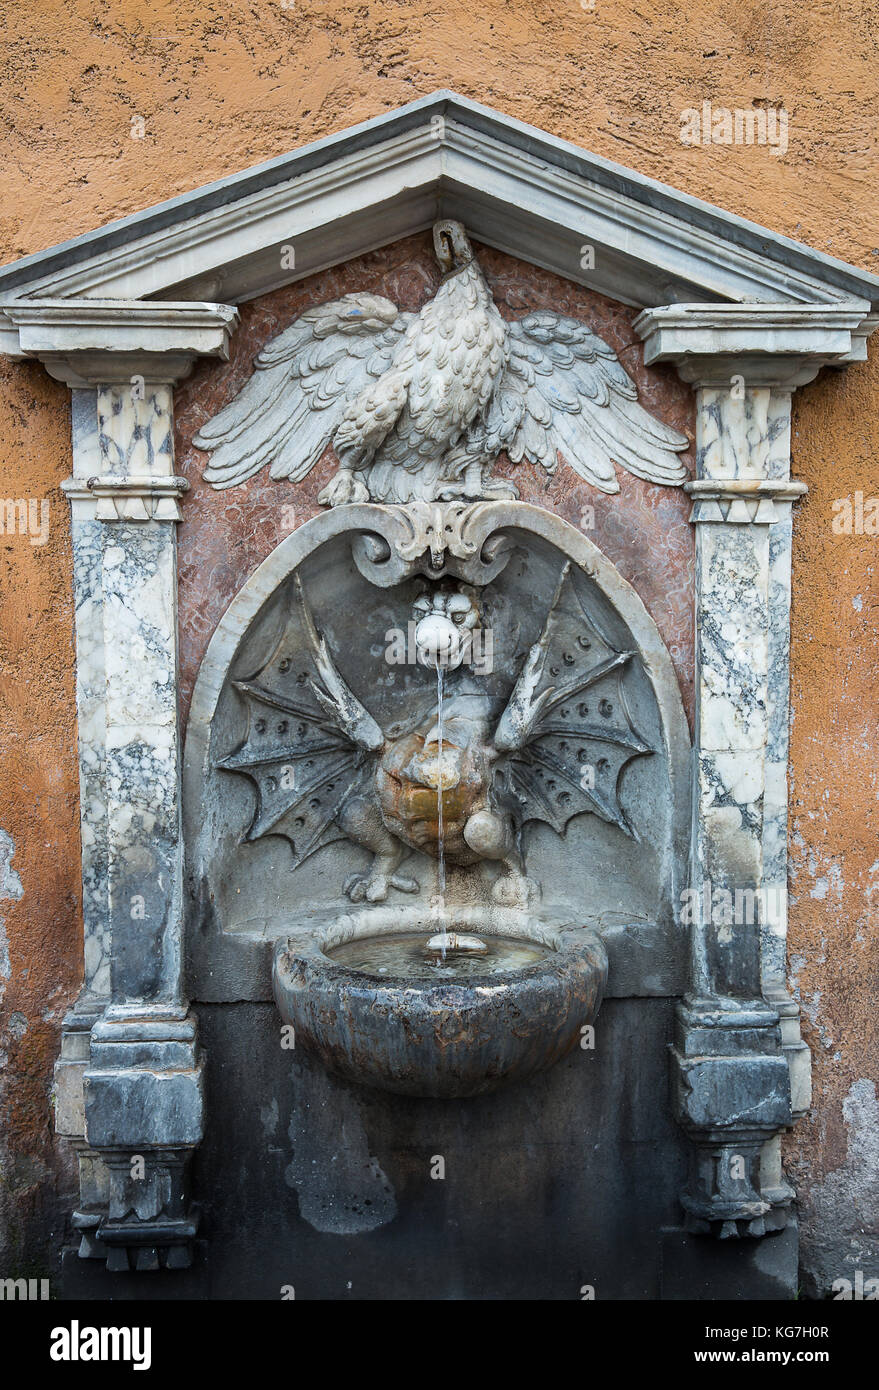 A drinking fountain in Rome located on Via della Conciliazione on the way to St. Peter's Basilica . Stock Photo